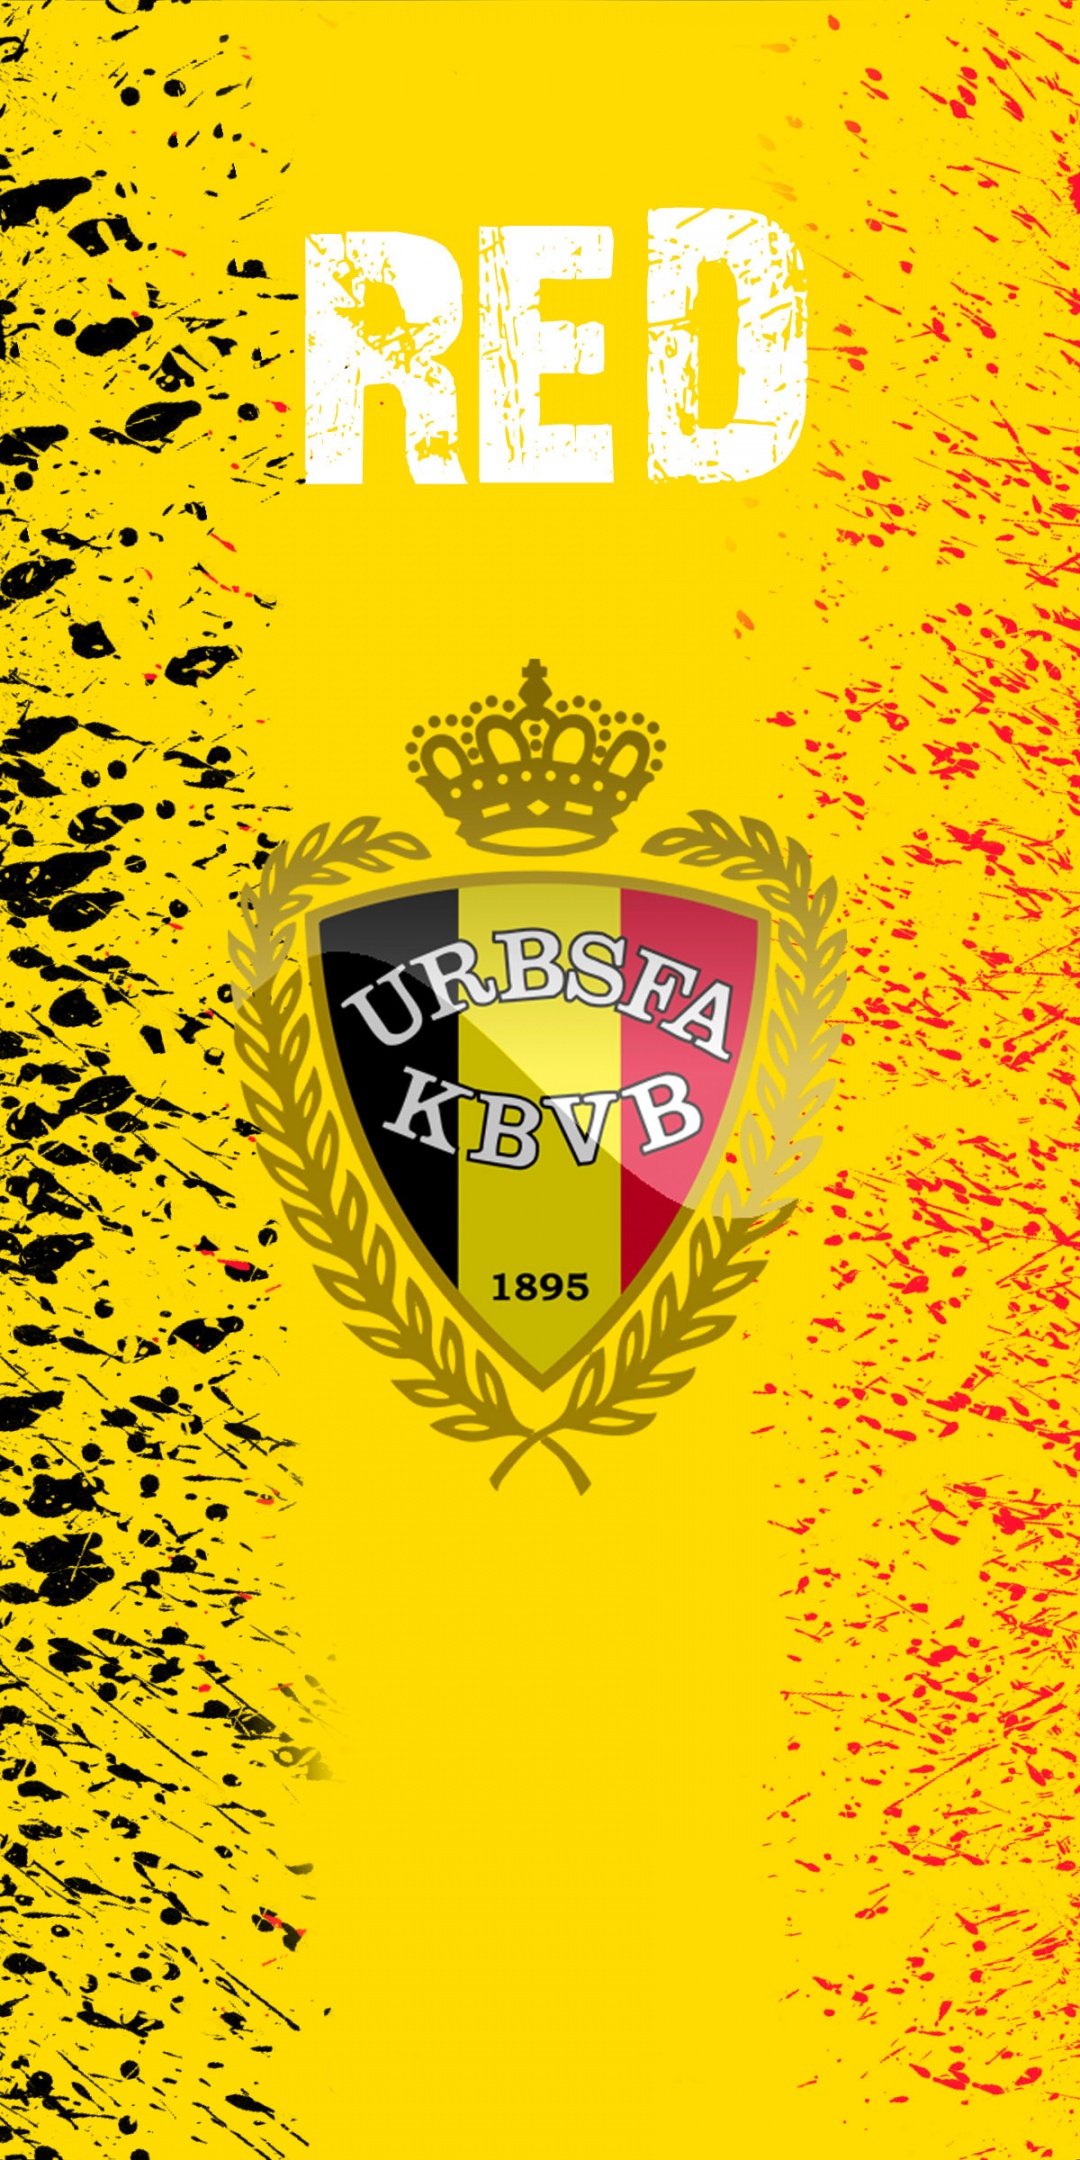 The Red Devils Belgium Football Crest Logo